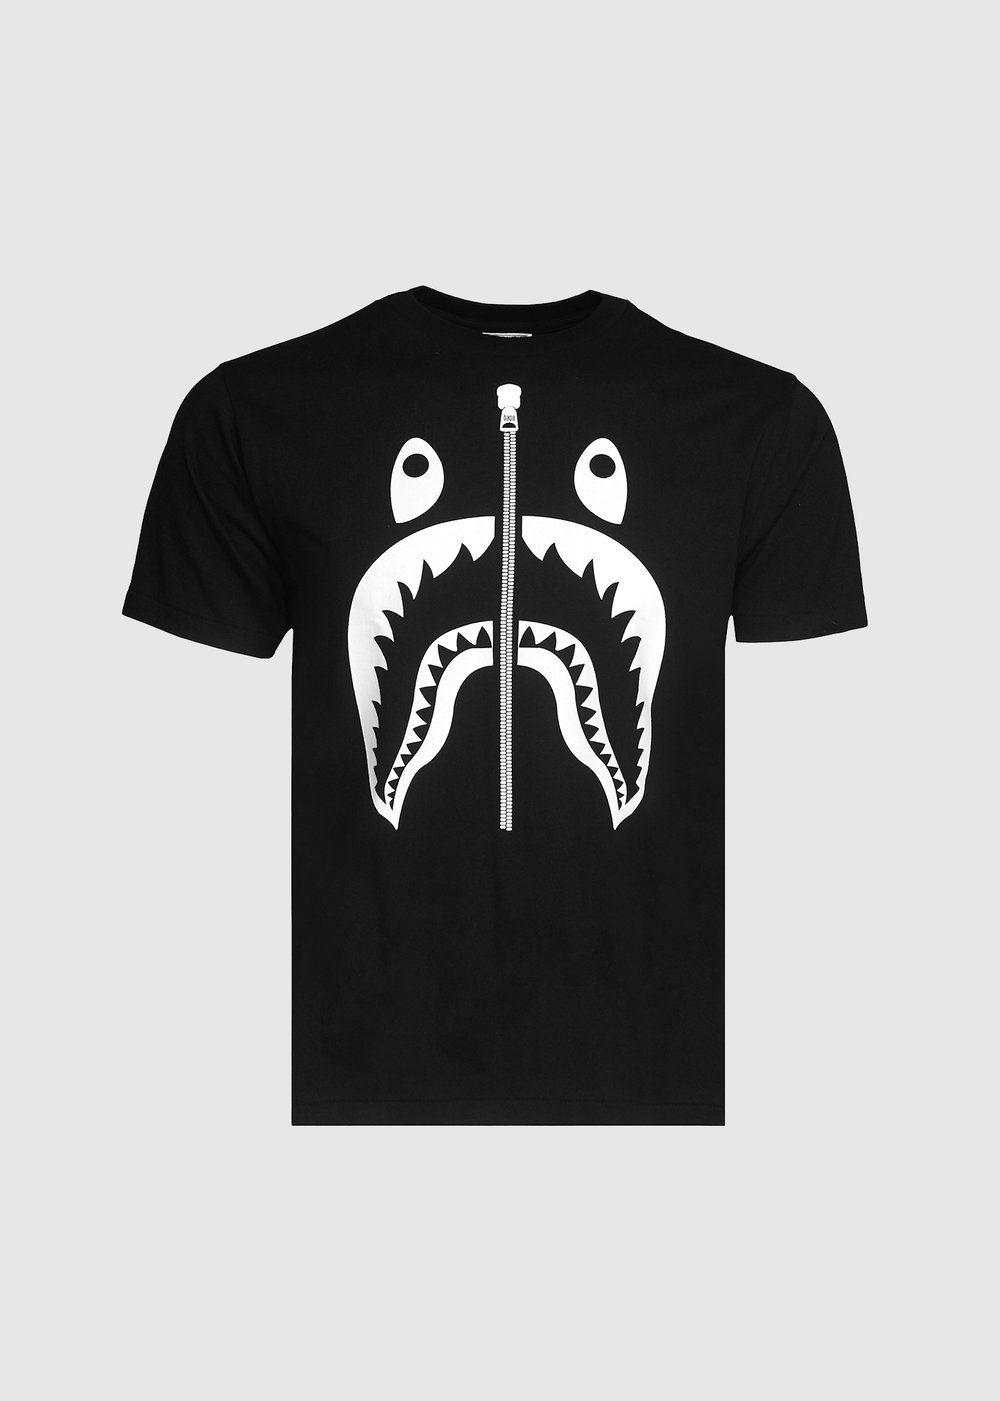 Black and White BAPE Shark Logo - Bape: Zipper Shark Tee [Black]